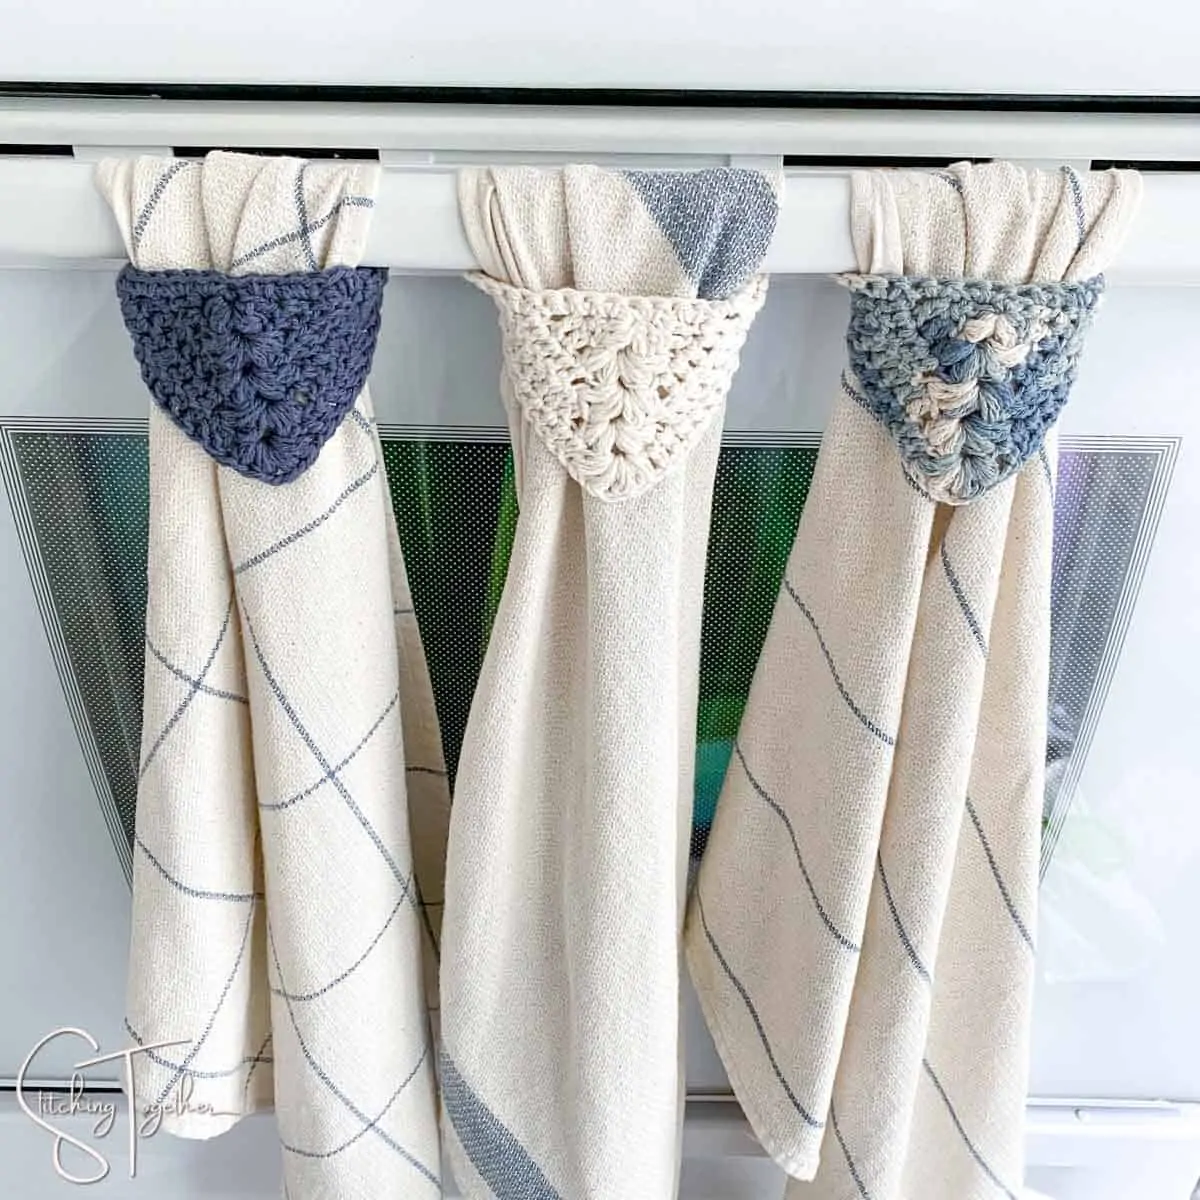 https://www.stitching-together.com/wp-content/uploads/2020/09/Easy-Crochet-Kitchen-Towel-Topper.webp